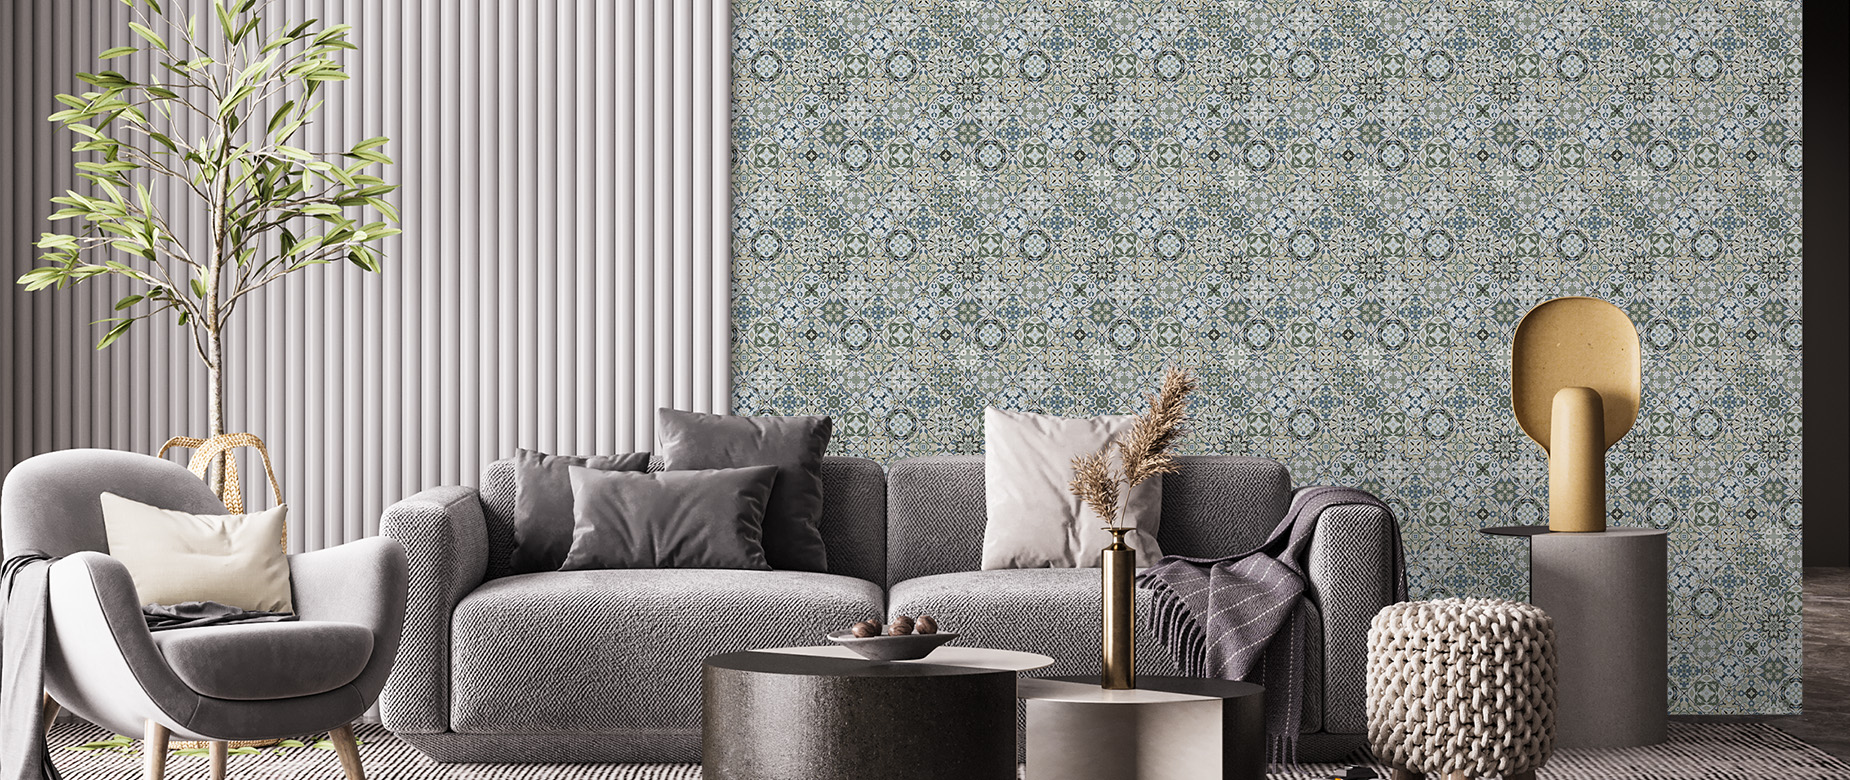 green-ethnic-design-Seamless design repeat pattern wallpaper-in-wide-room